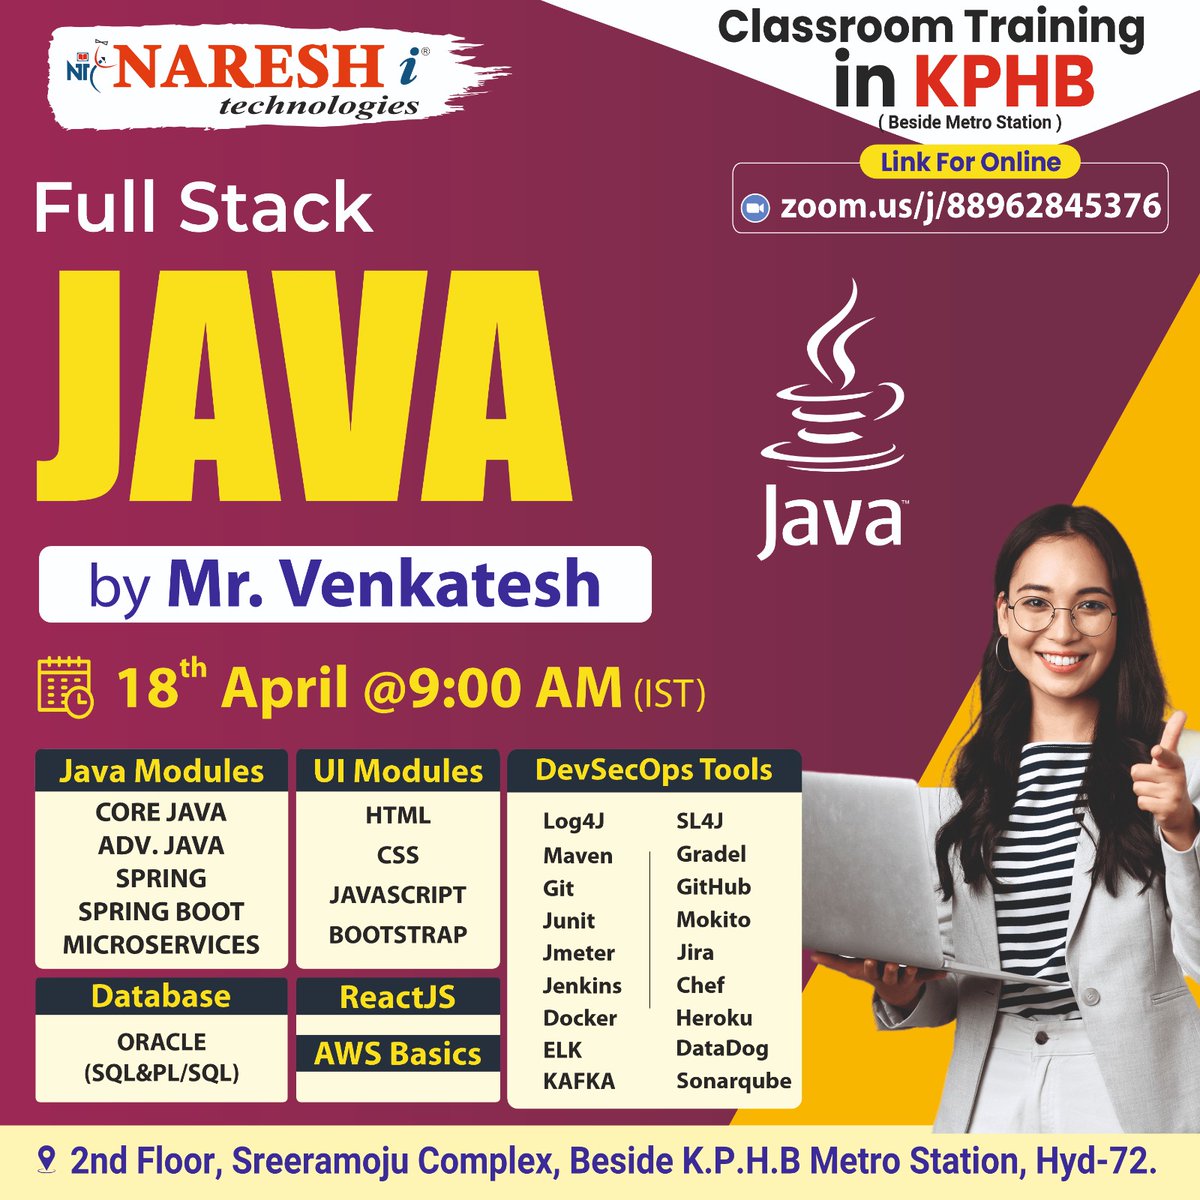 🔴 Classroom & Online Training at KPHB Branch 🔴

✍️Enroll Now: bit.ly/3Jj7p9P
👉Attend a Free Demo On Full Stack Java Developer by Mr. Venkatesh
📅Demo On: 18th April @ 9:00 AM (IST)

#java #fullstackjava #javadeveloper #onlinetraining #kphb #nareshit